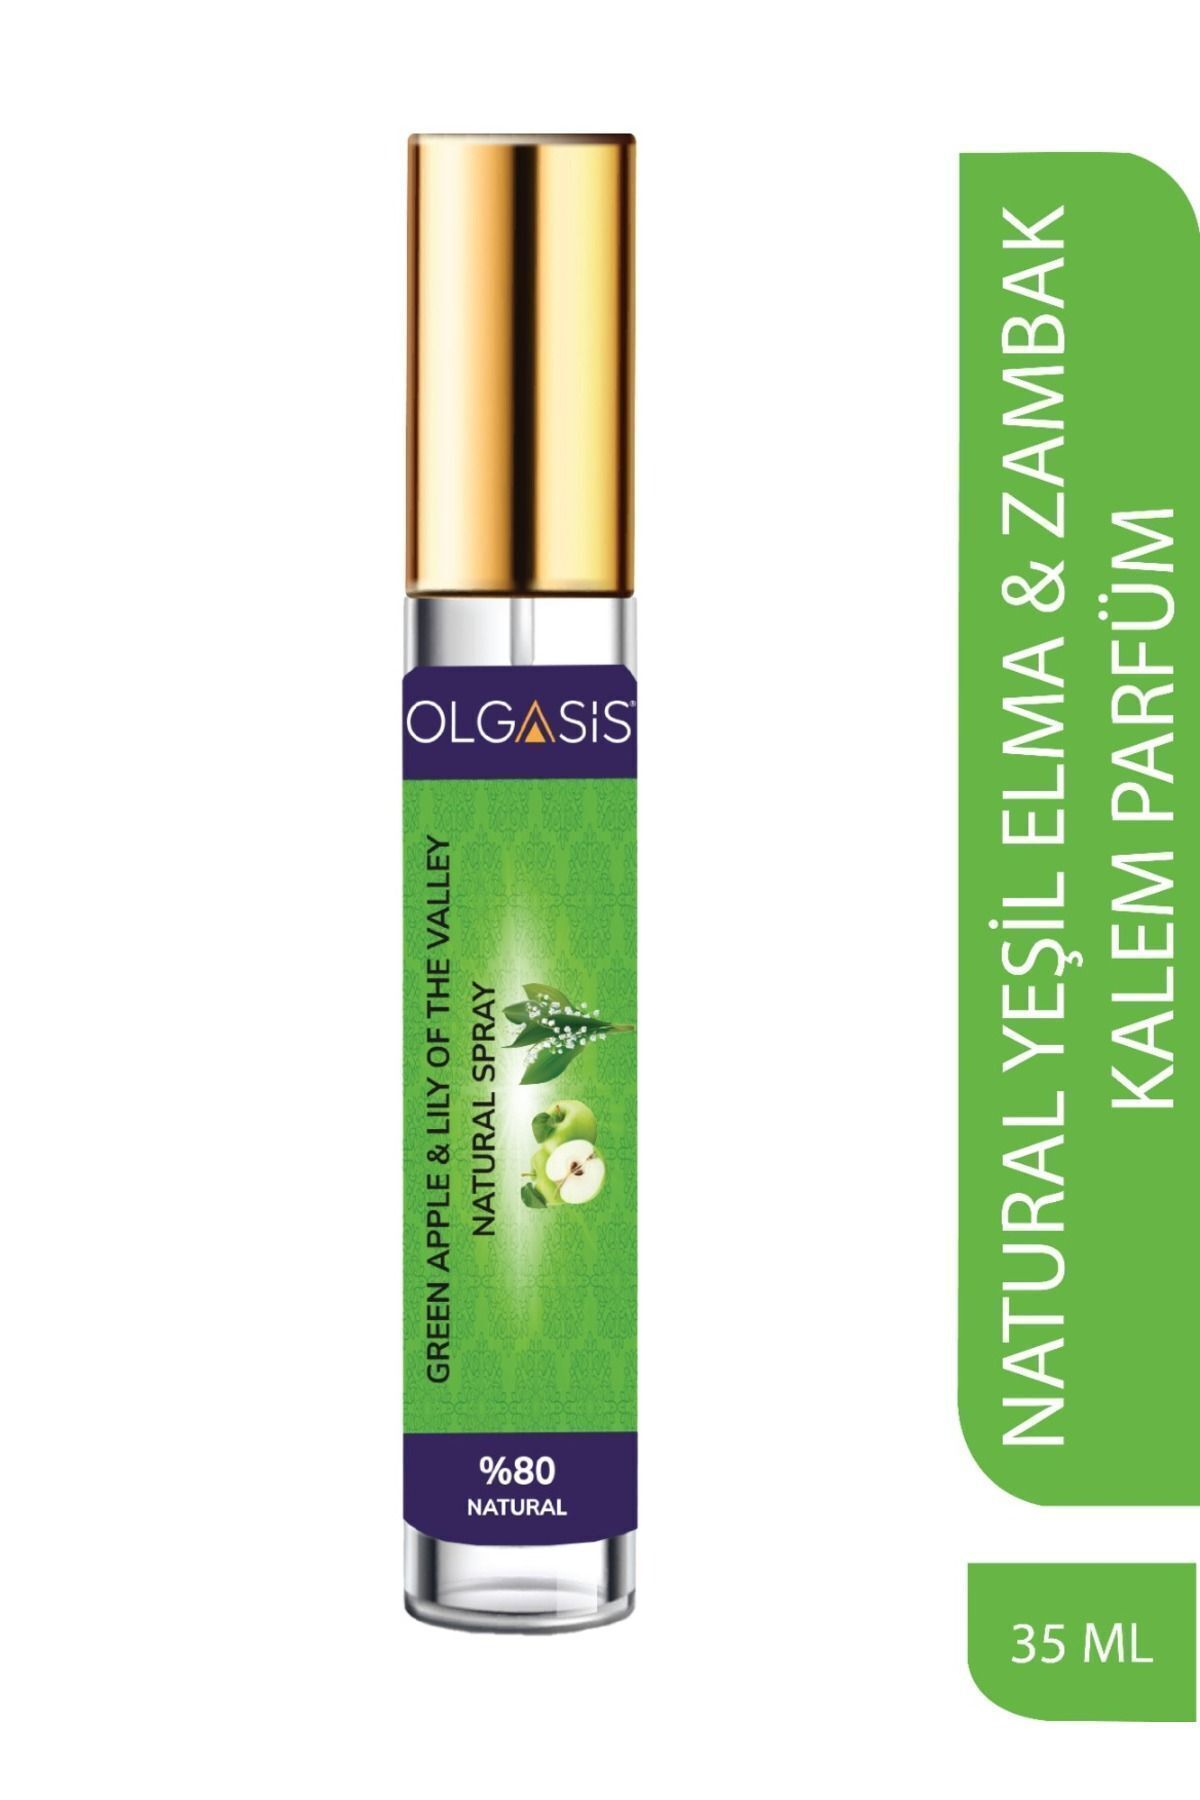 Olgasis Green Apple & Lıly Of The Valley Natural Spray %80 Natural Yeşil Elma Vadi Zambağı Kalem Parfüm 35ml